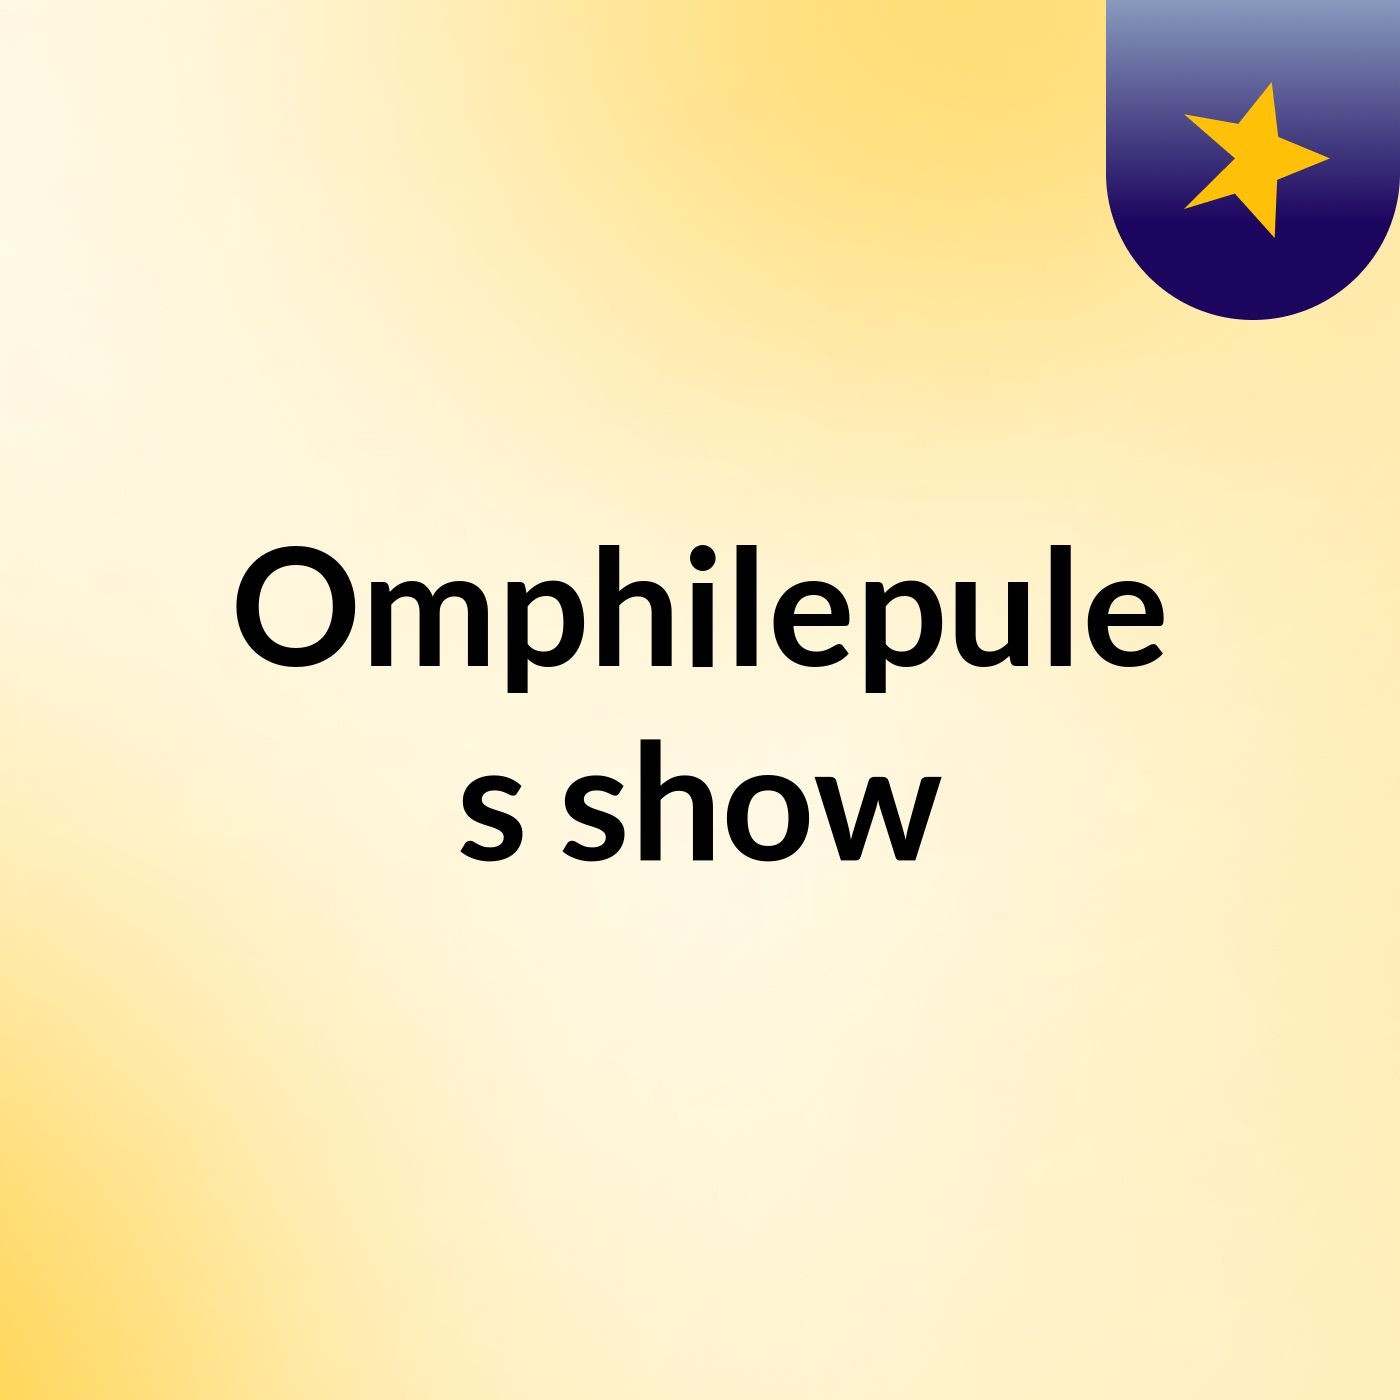 Omphilepule's show